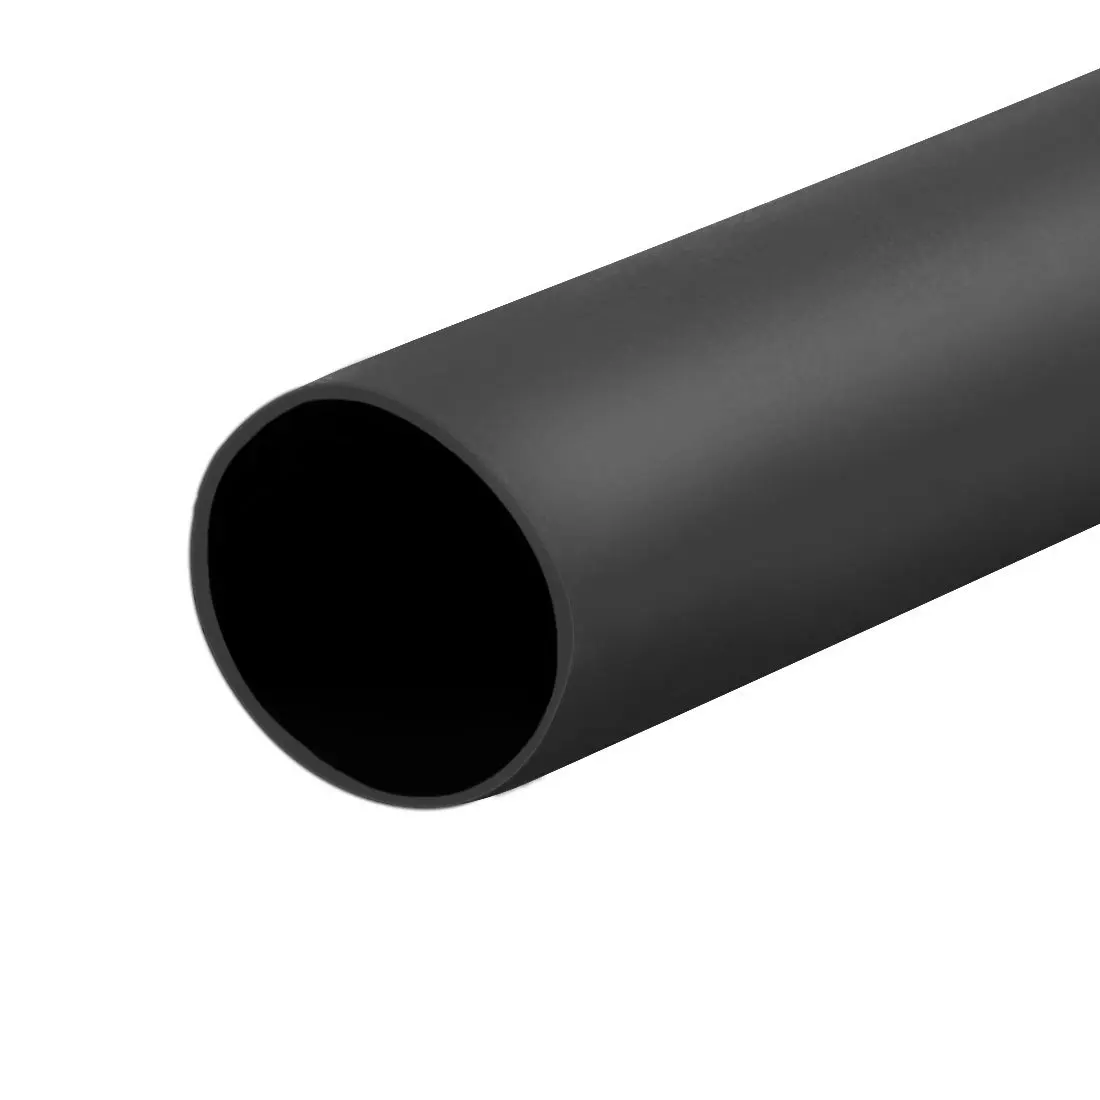 

Keszoox Heat Shrink Tubing 4mm Dia 2:1 Heat Shrink Tube Wrap Cable Sleeve 1m Black